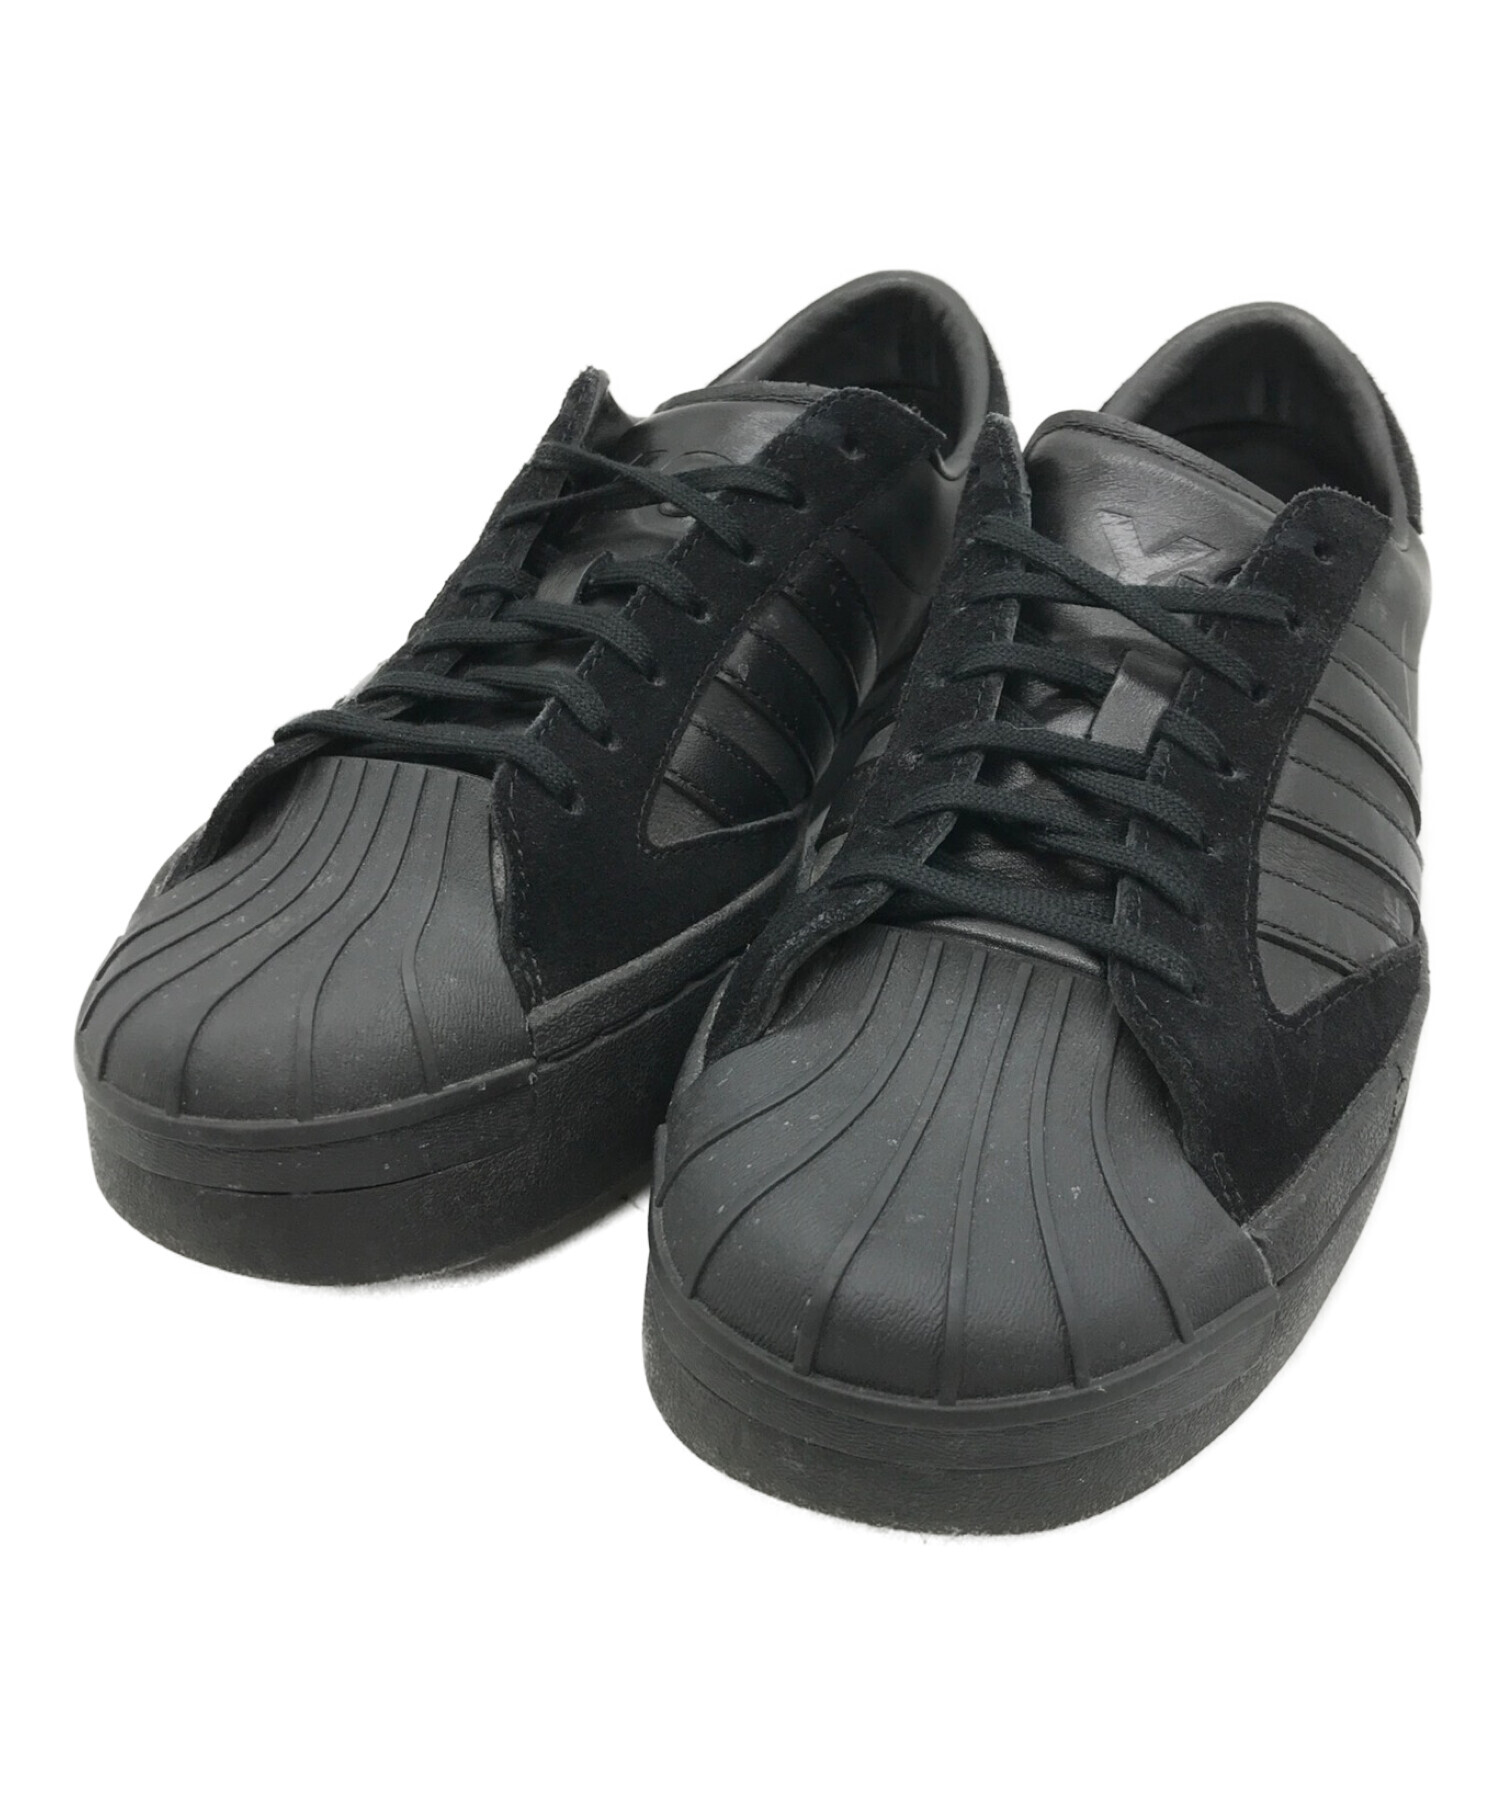 Y-3 (ワイスリー) adidas (アディダス) スニーカー ブラック サイズ:25.5cm